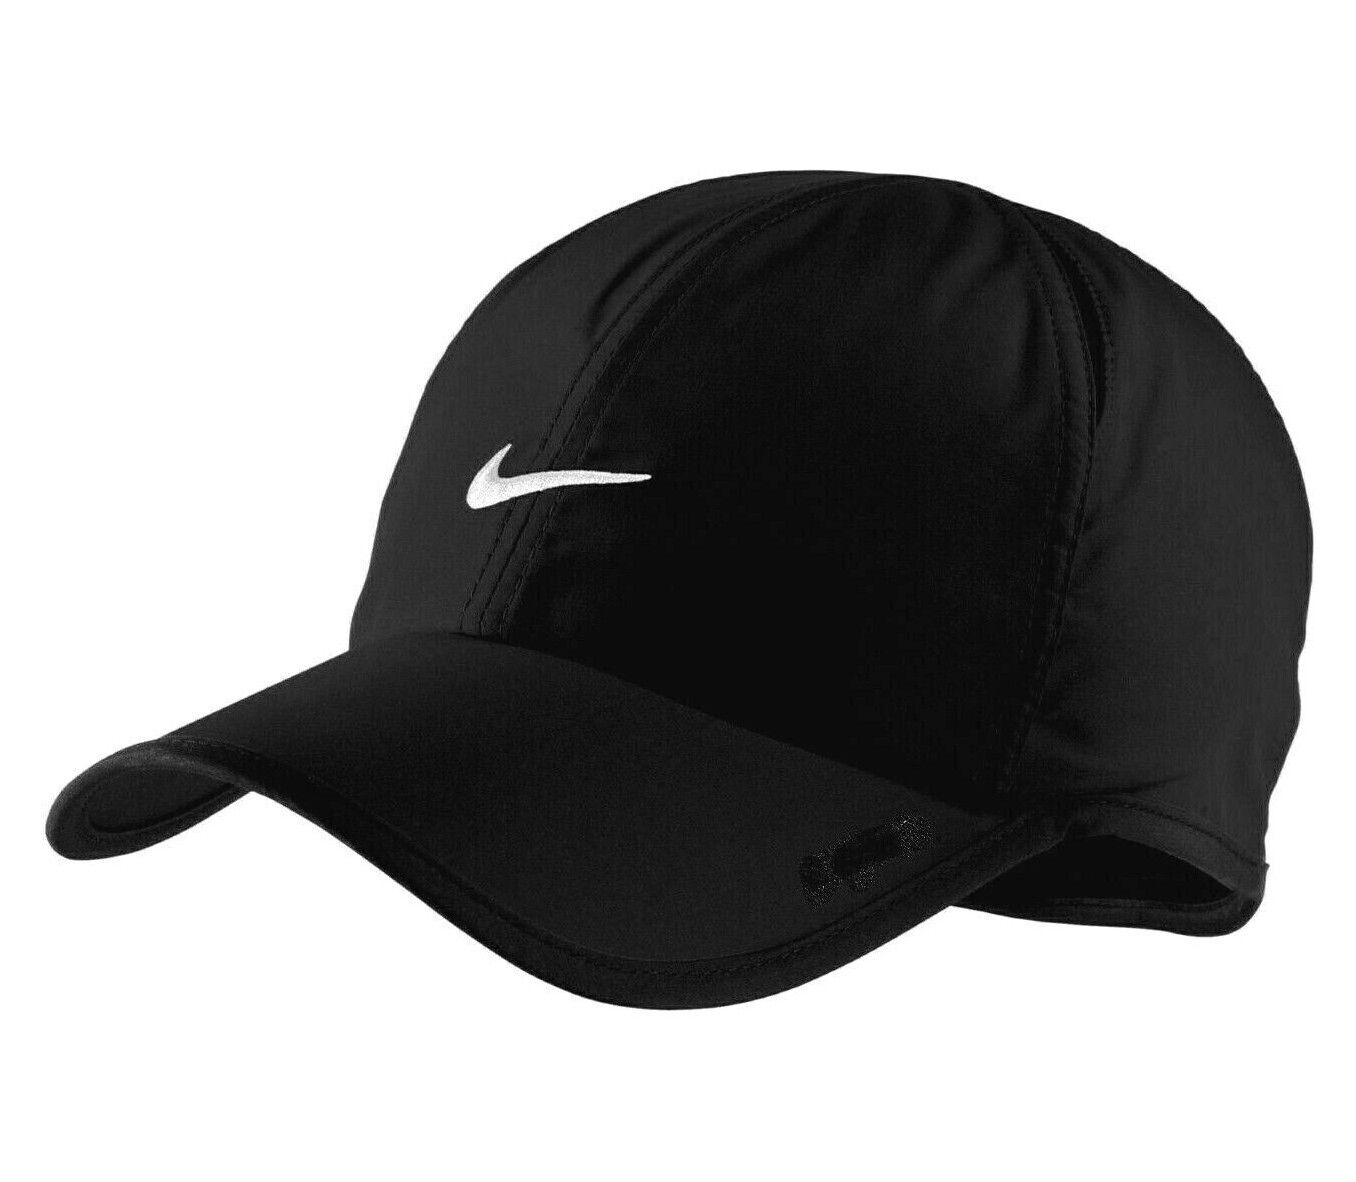 NIKE Women's AeroBill Featherlight Tennis Cap, Black/Black/White, One Size  